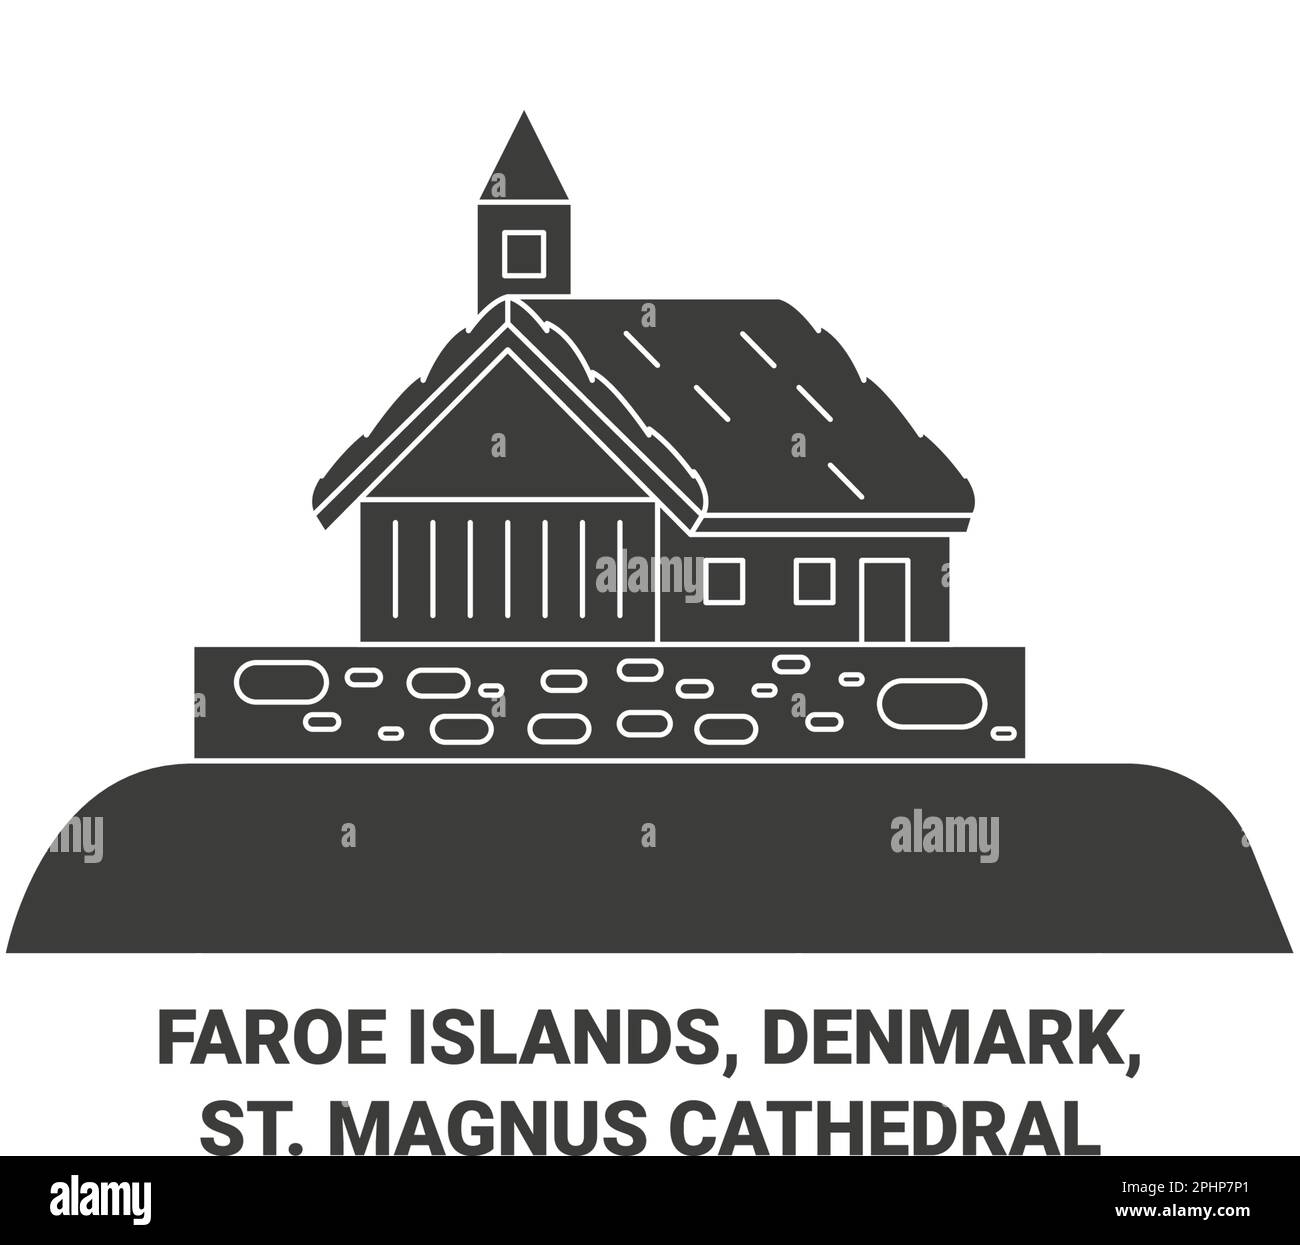 Denmark, Faroe Islands, St. Magnus Cathedral travel landmark vector illustration Stock Vector